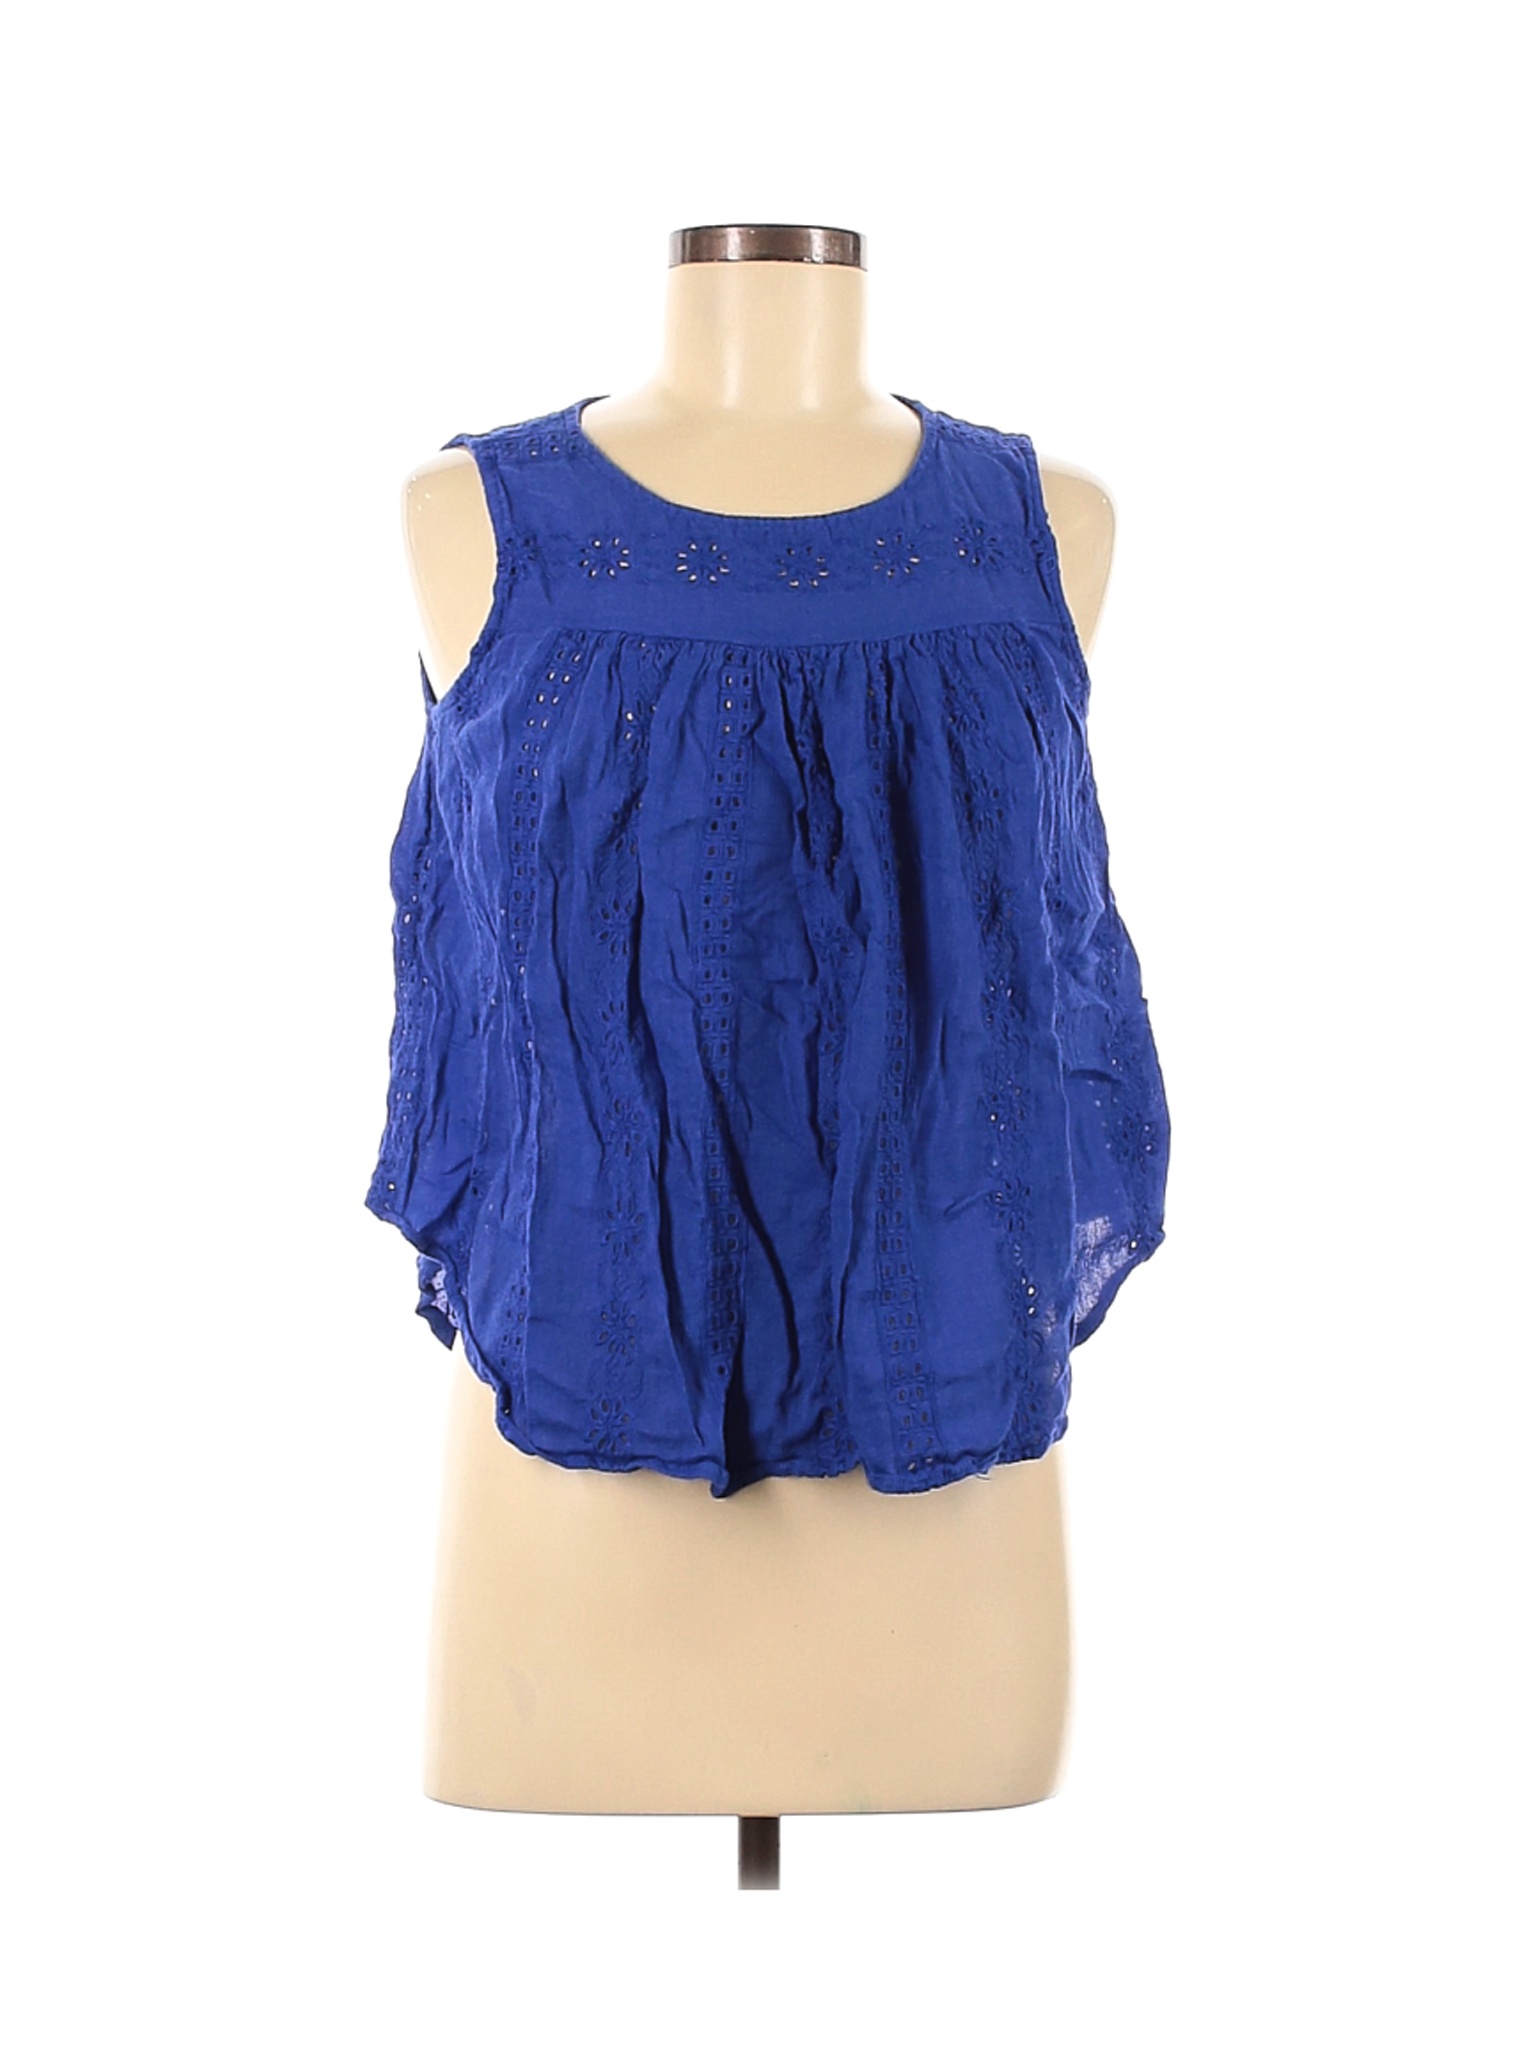 Gap Women Blue Sleeveless Blouse M | eBay